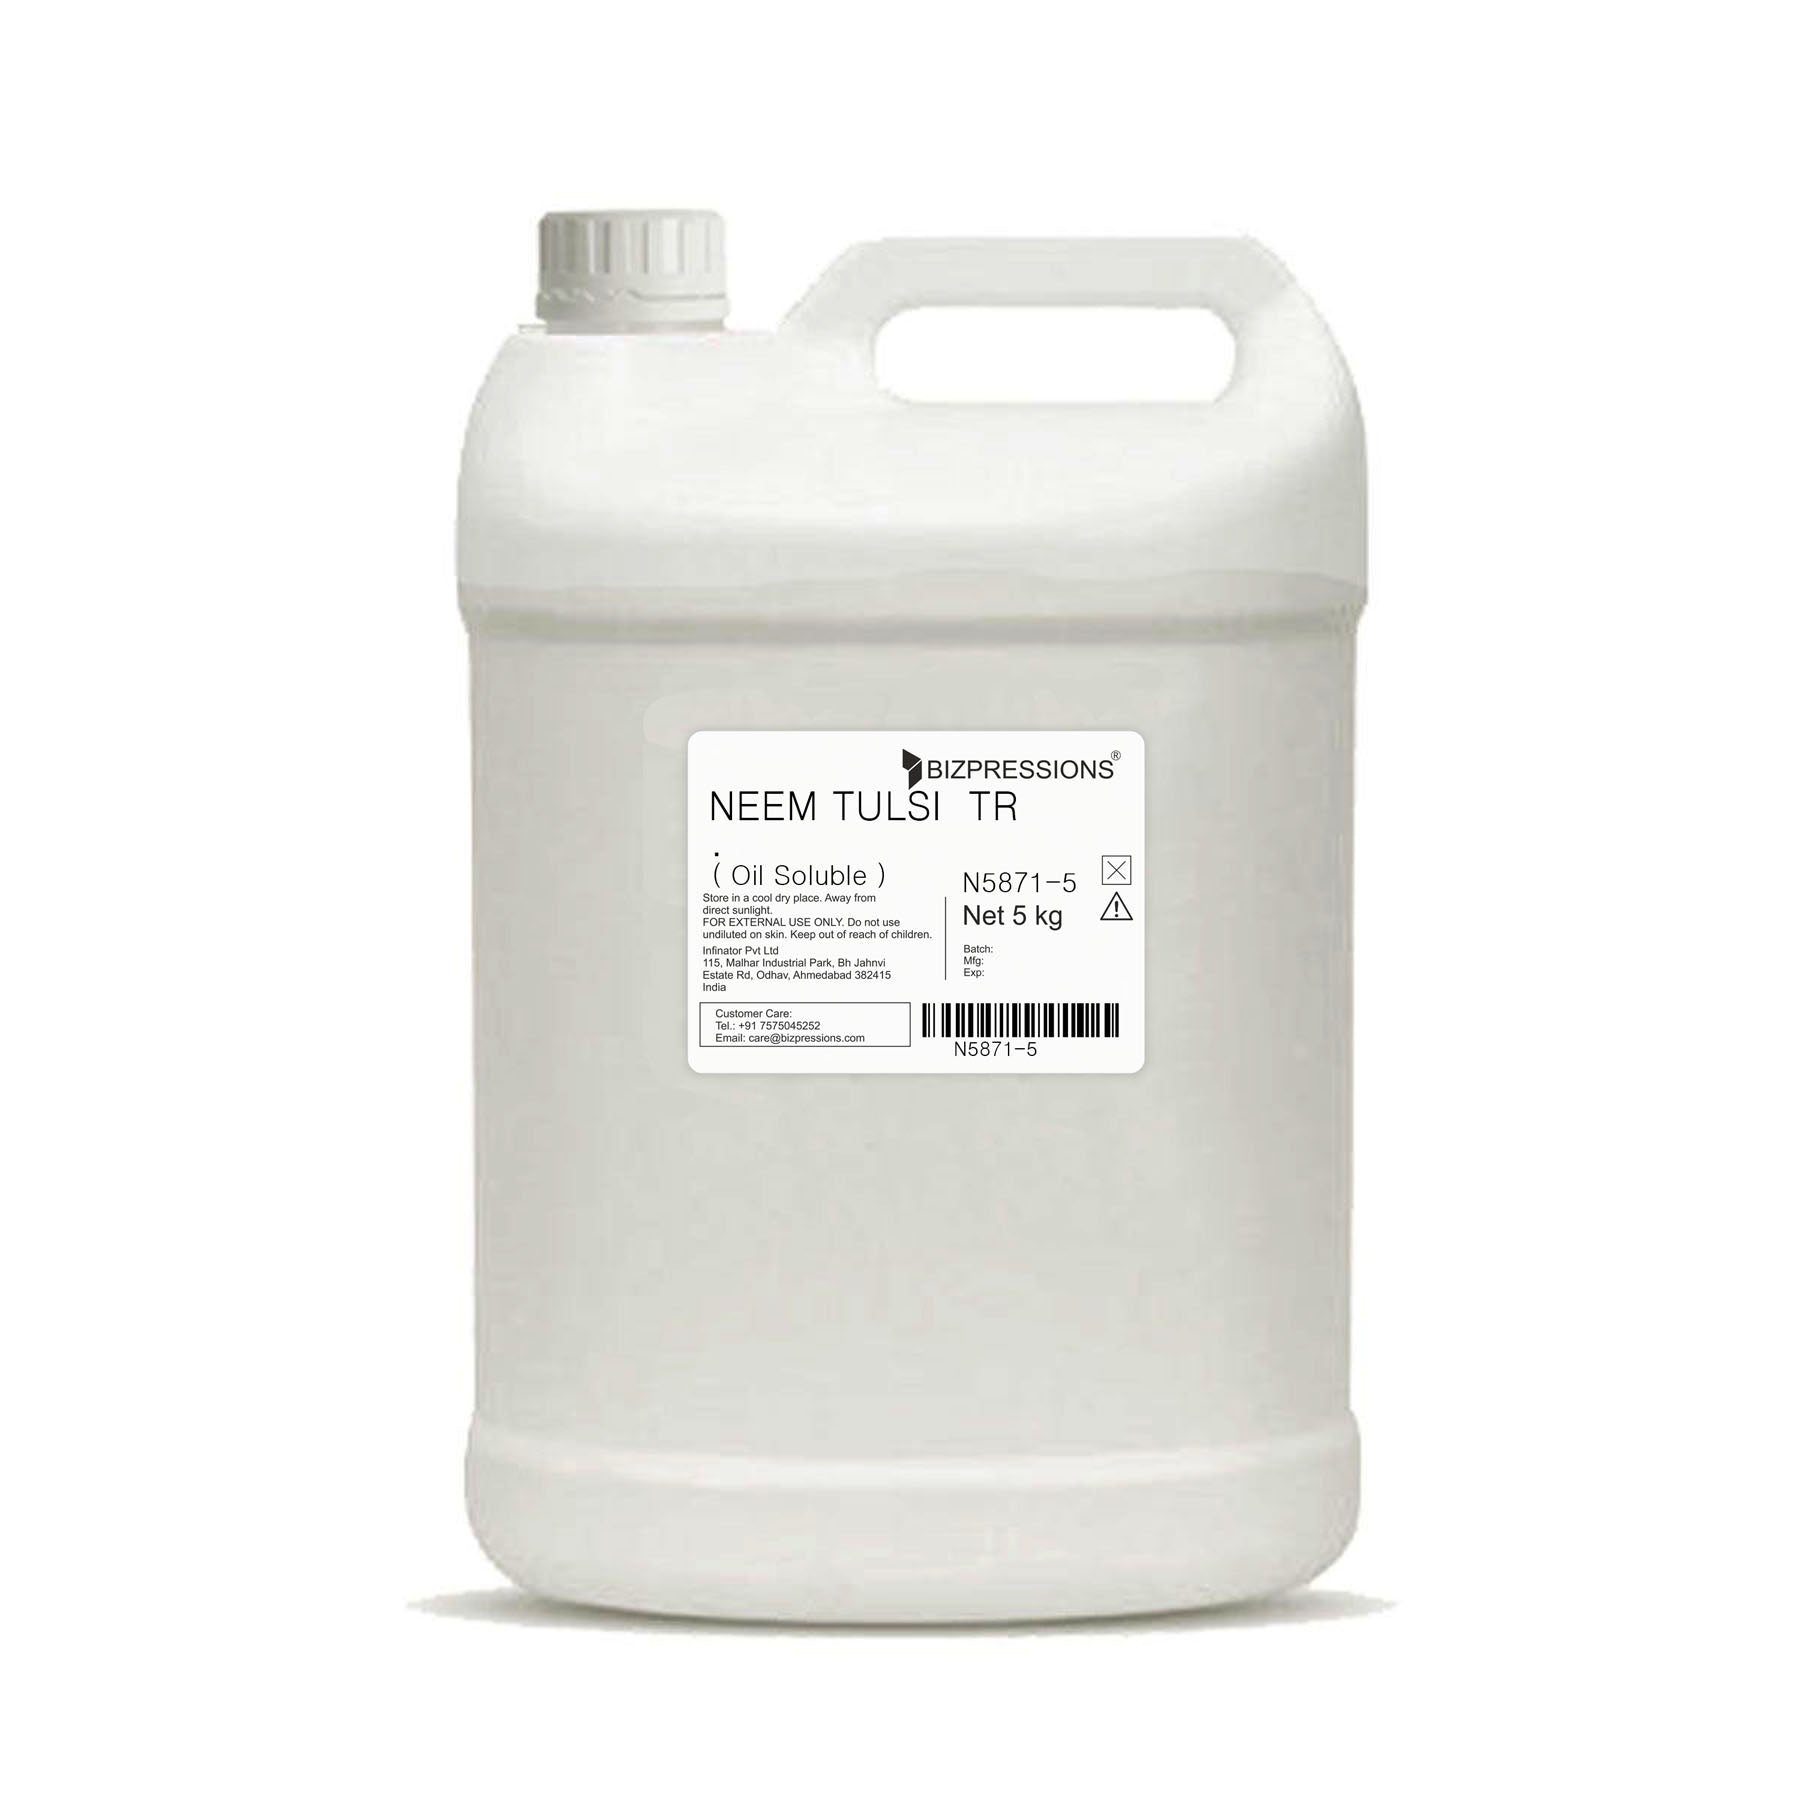 NEEM TULSI TR - Fragrance ( Oil Soluble ) - 5 kg